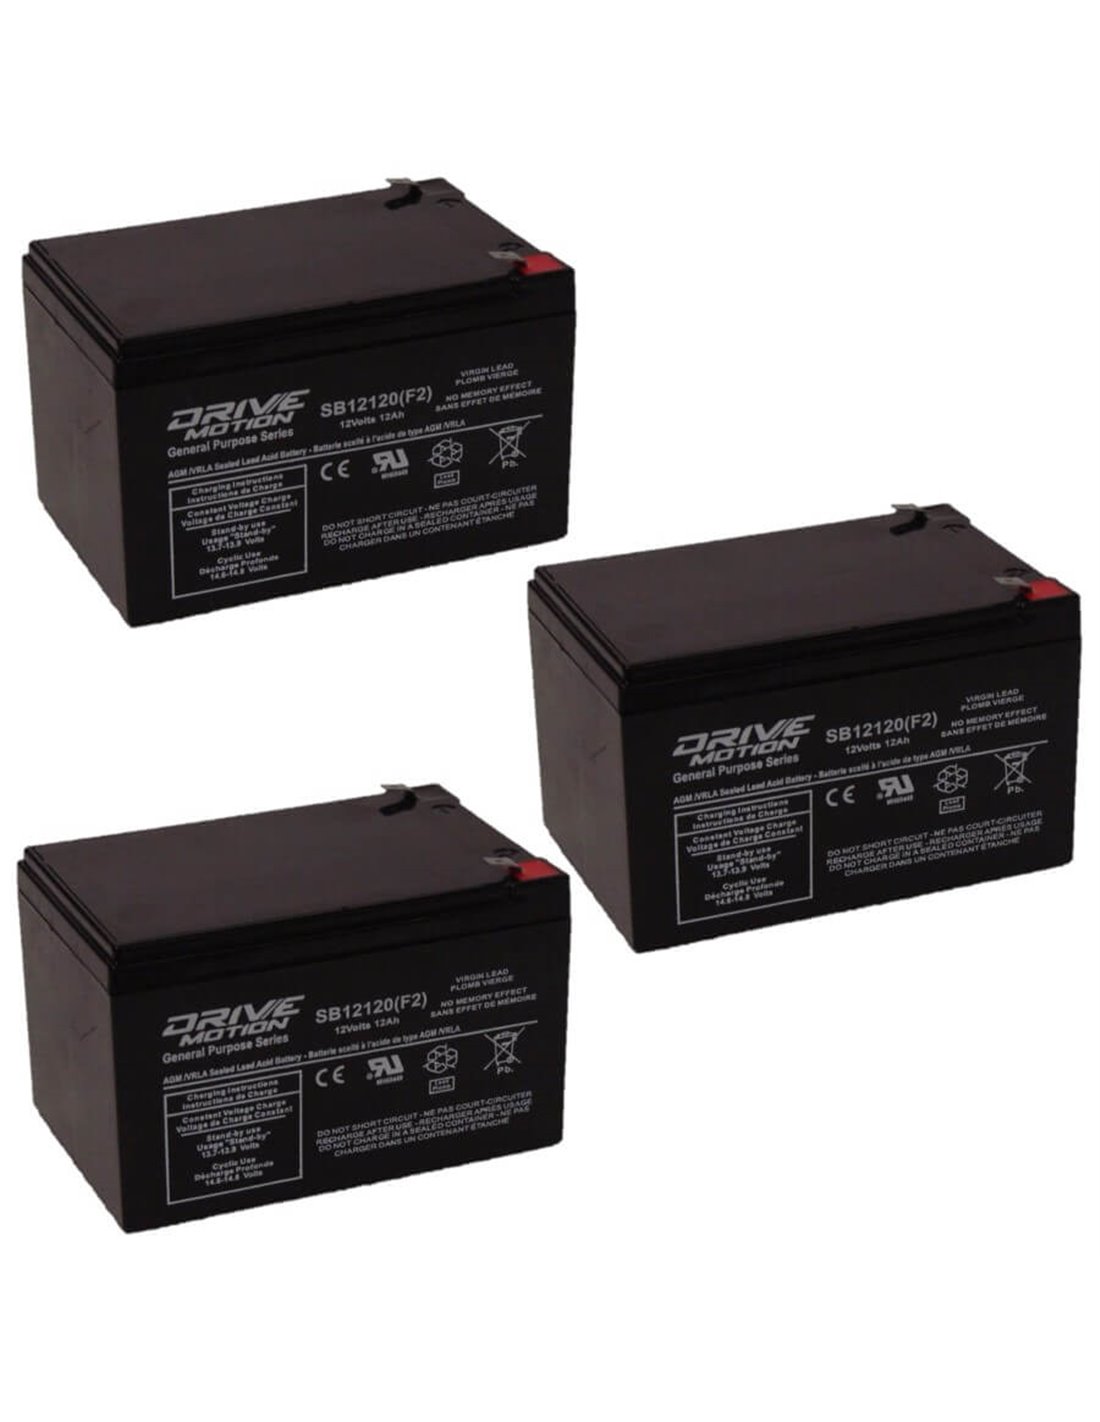 https://www.batterybuyer.com/270623-thickbox_default/replacement-mower-batteries-for-black-decker-rb-3612-rb3612-pack.jpg